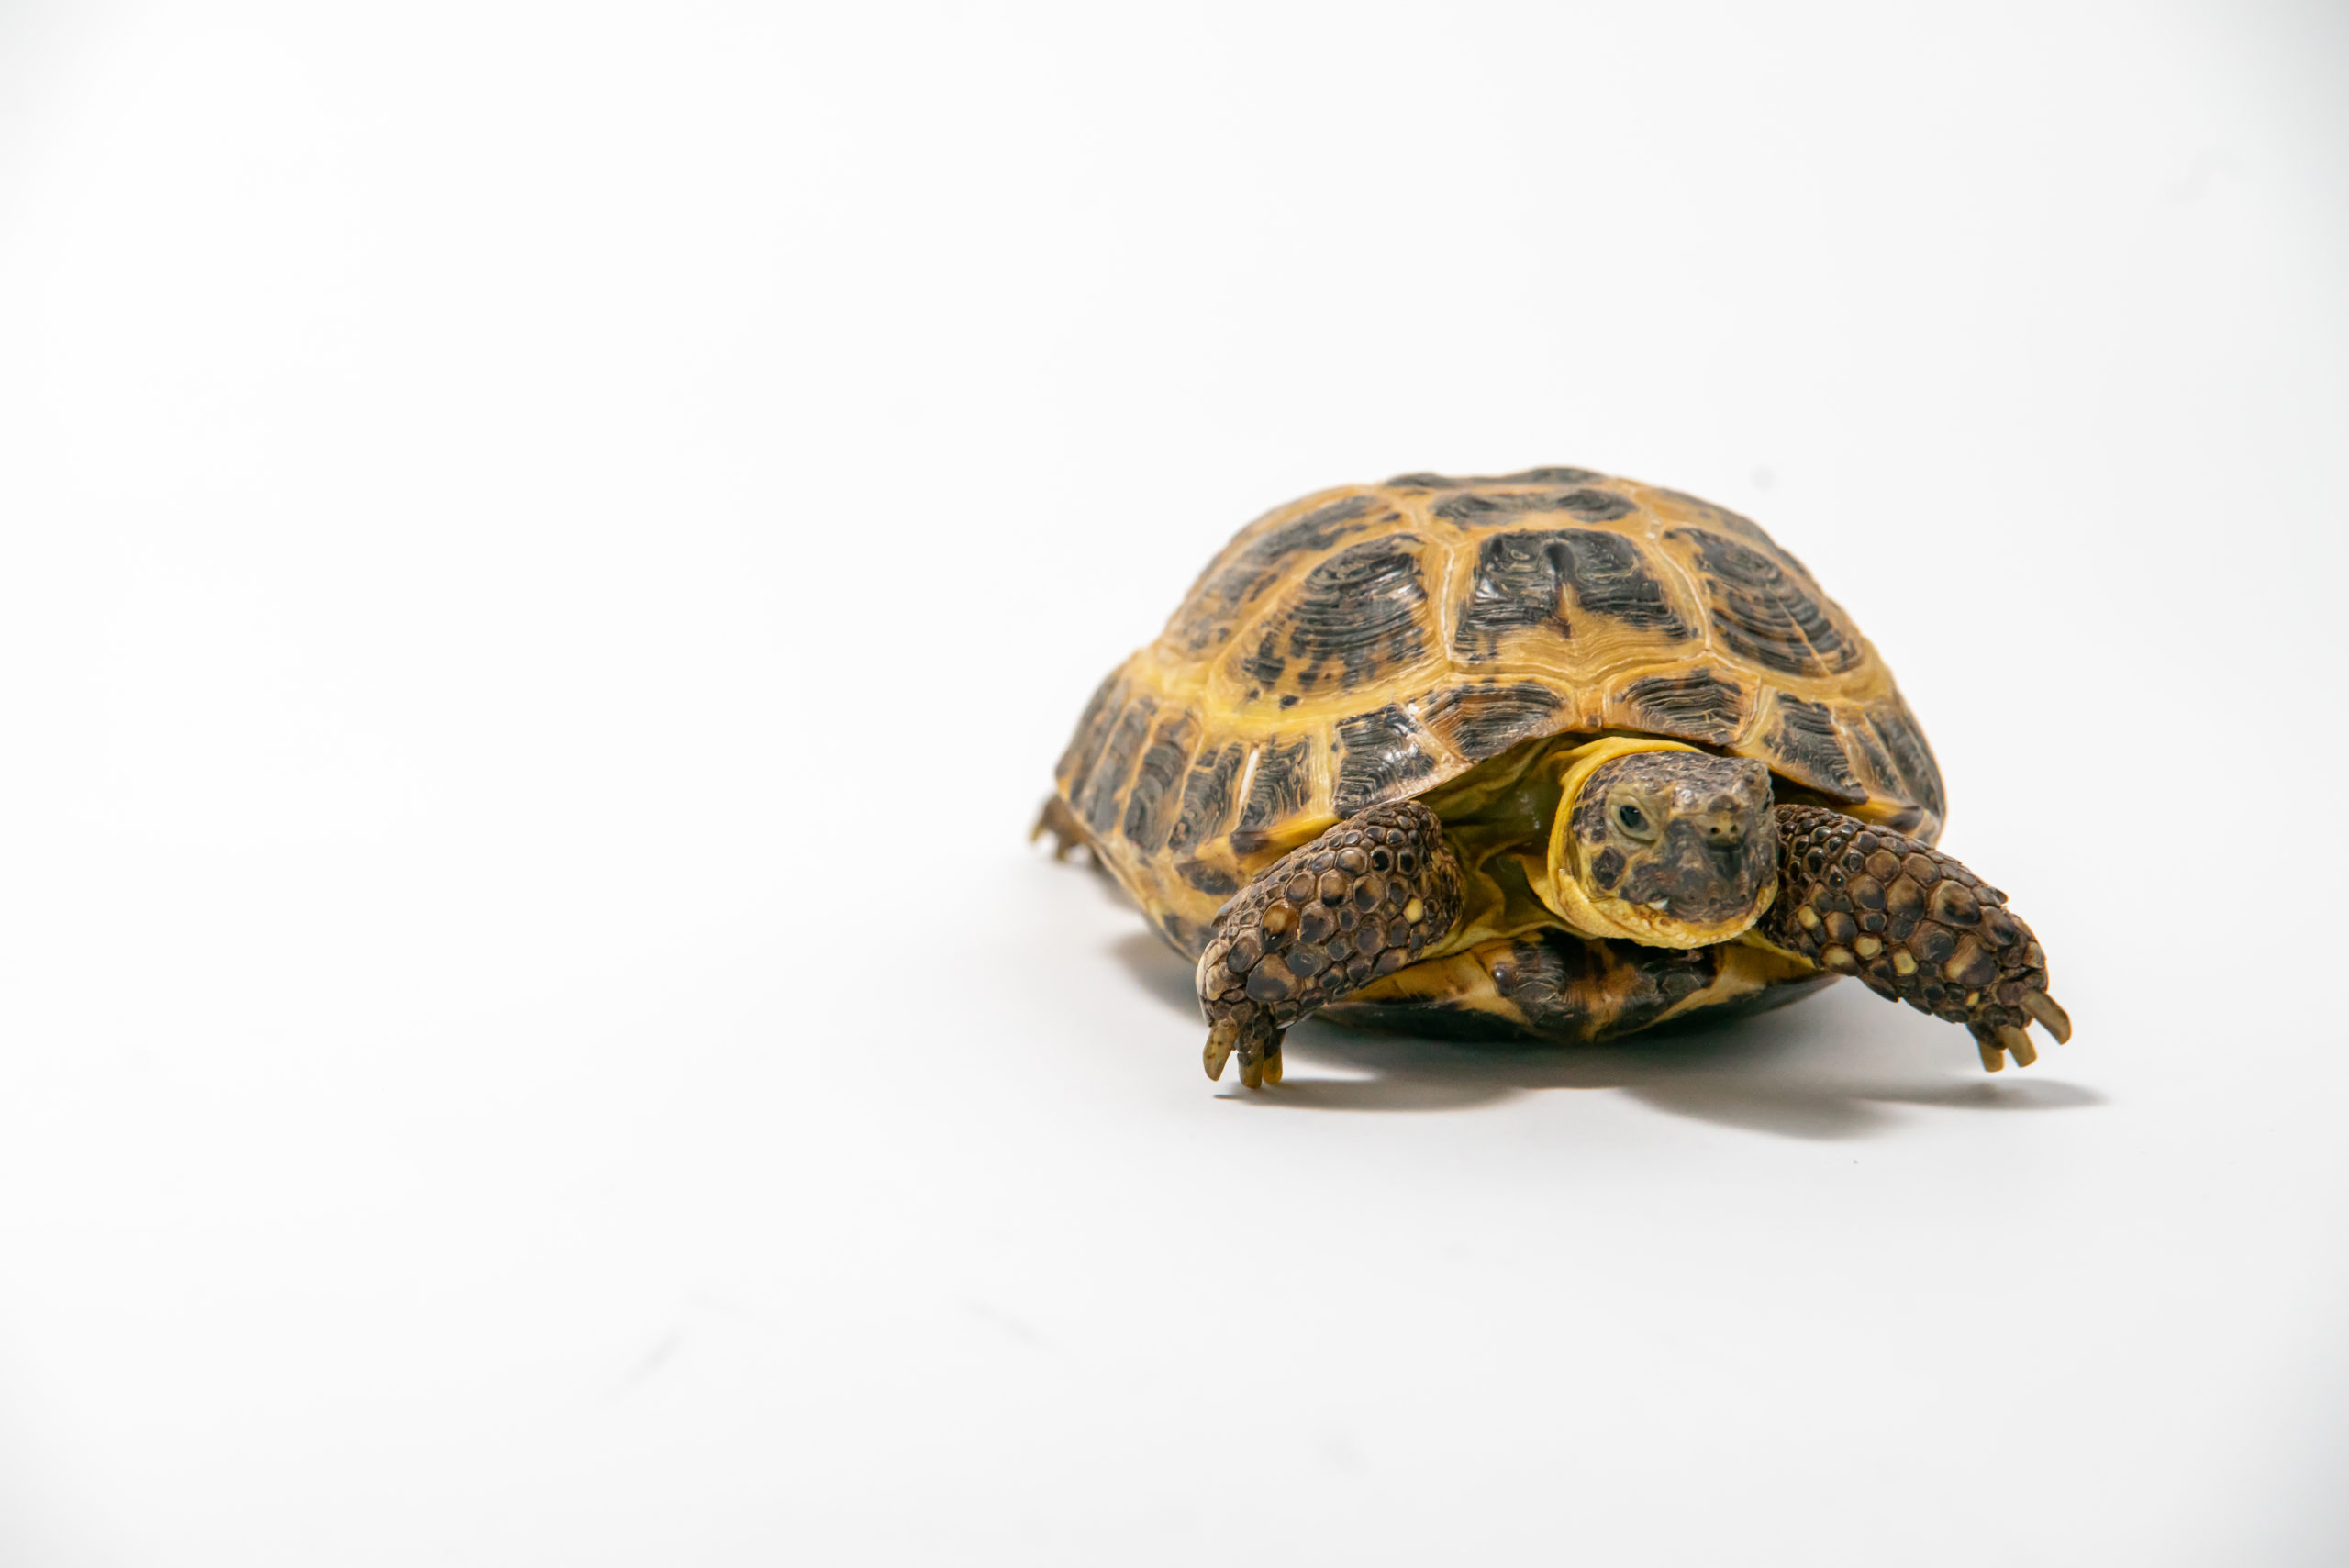 Horsfield's tortoise